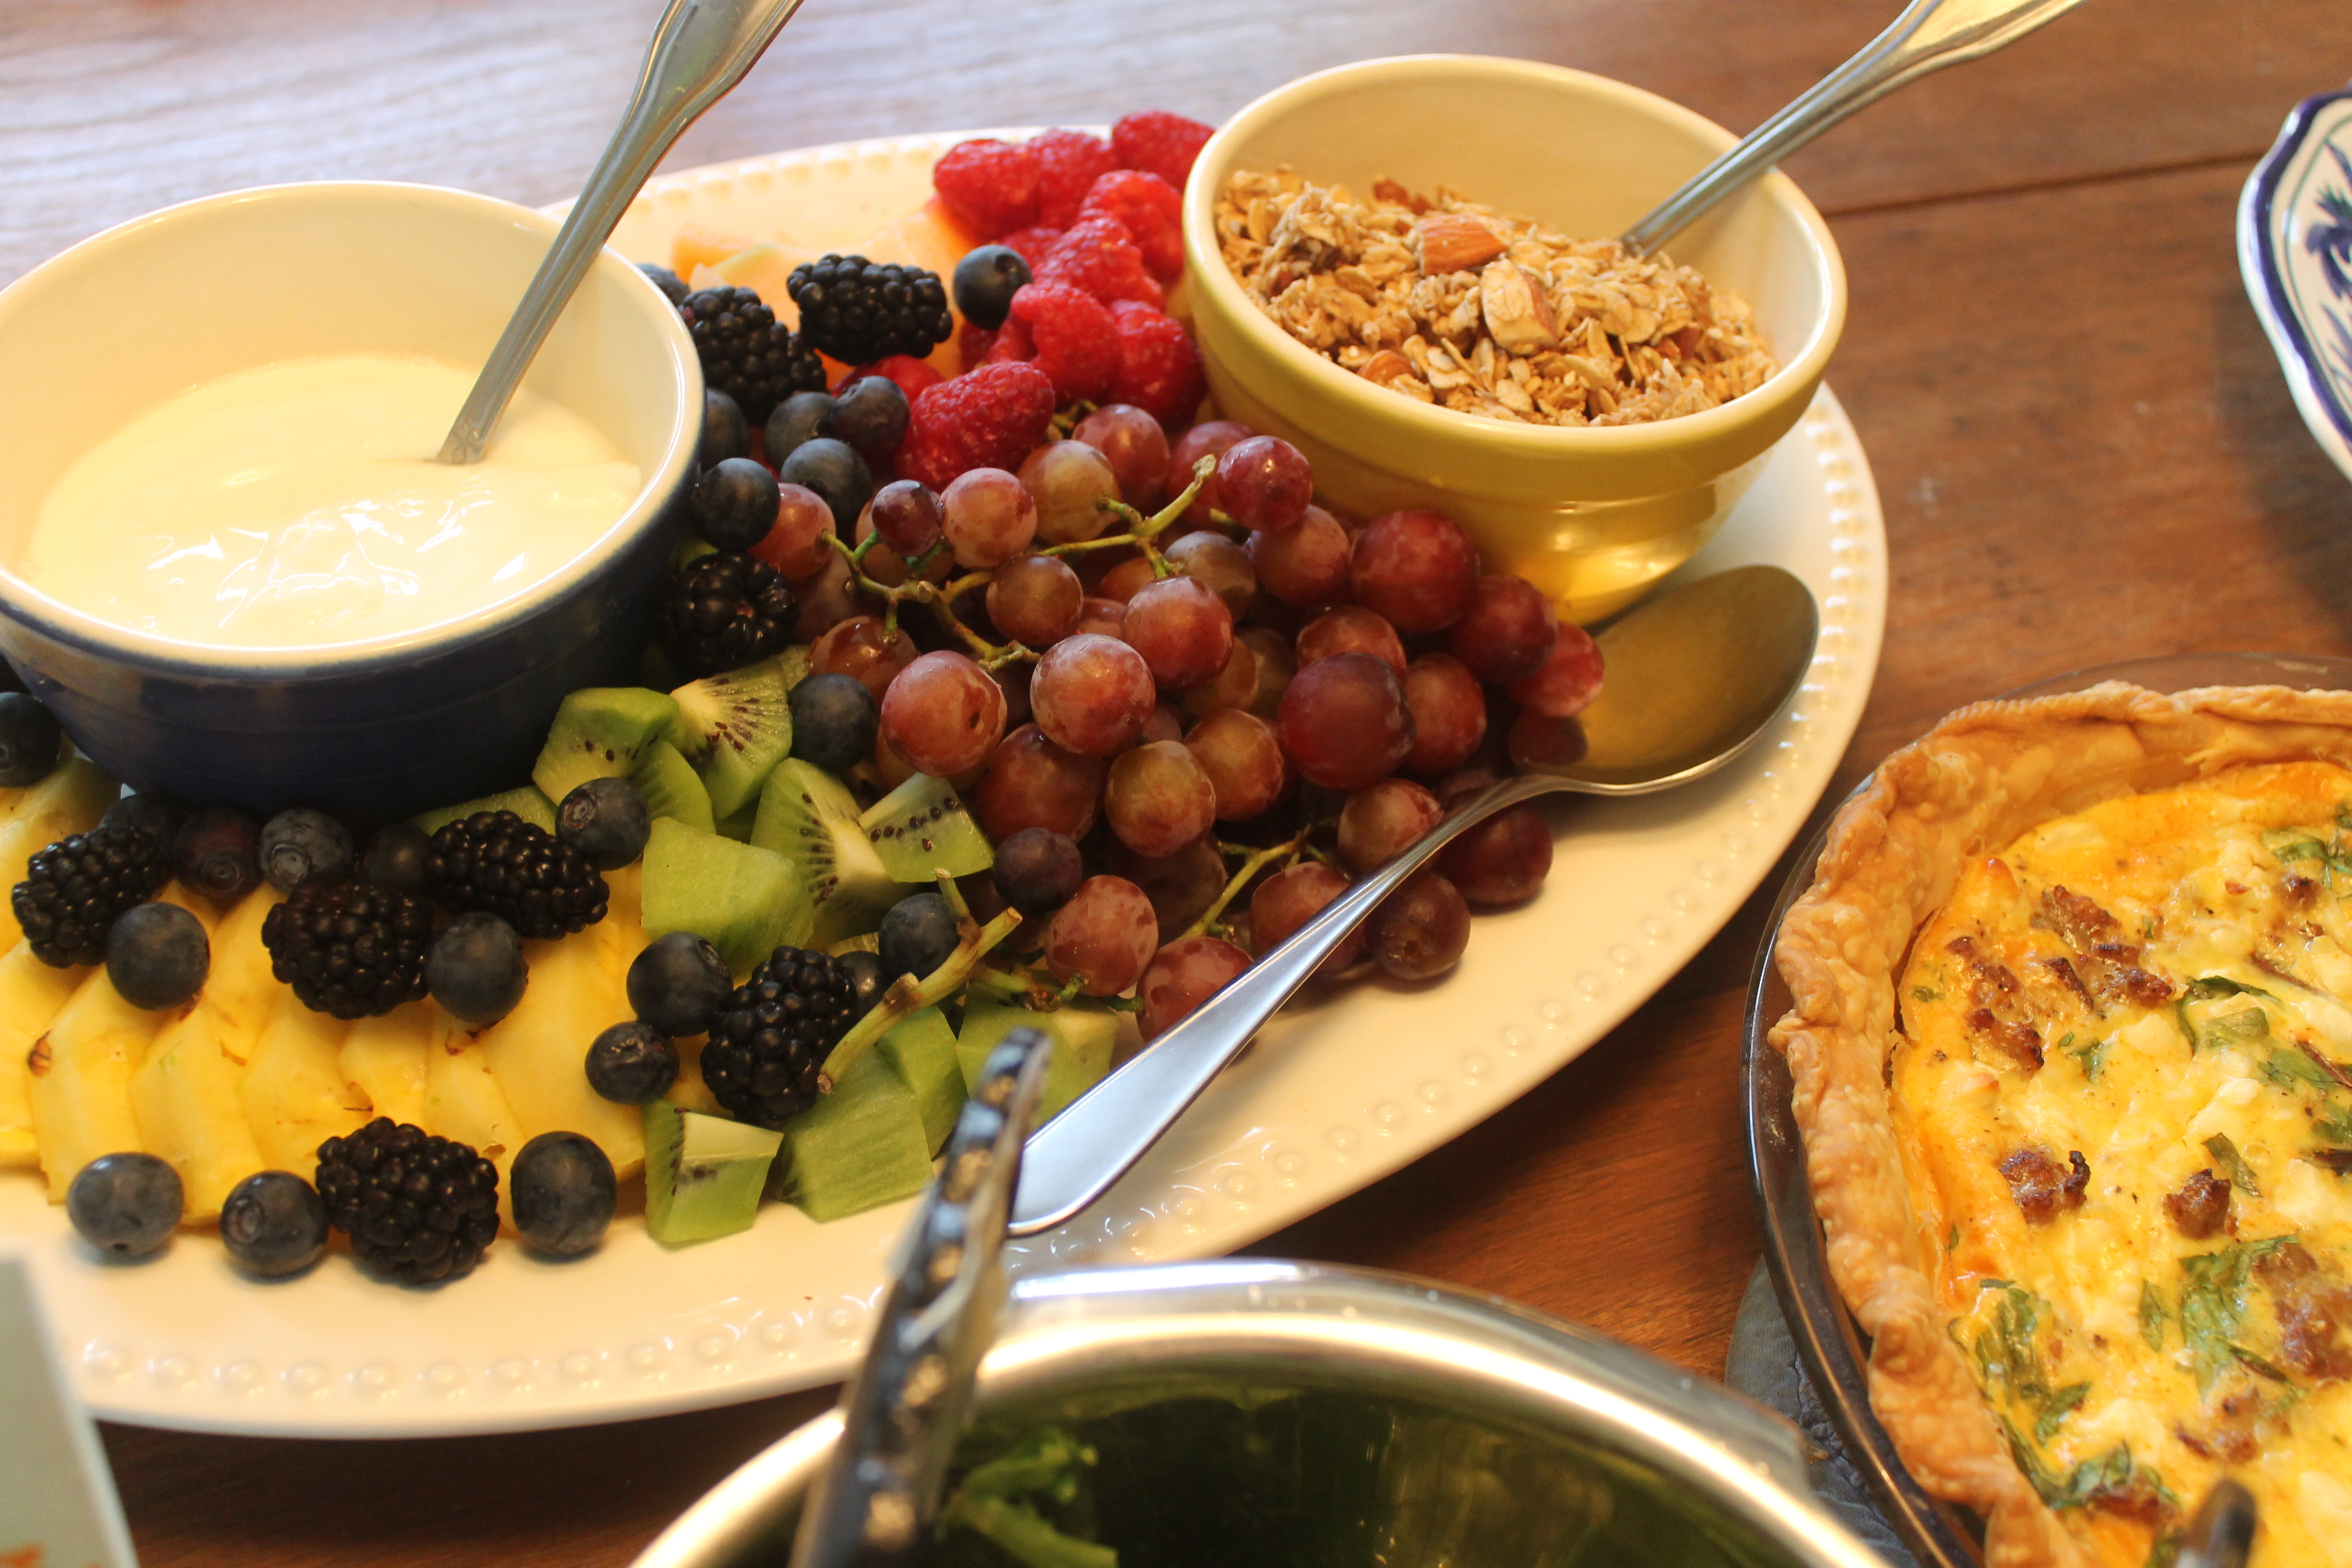 Fruit Plate with Yogurt and Granola